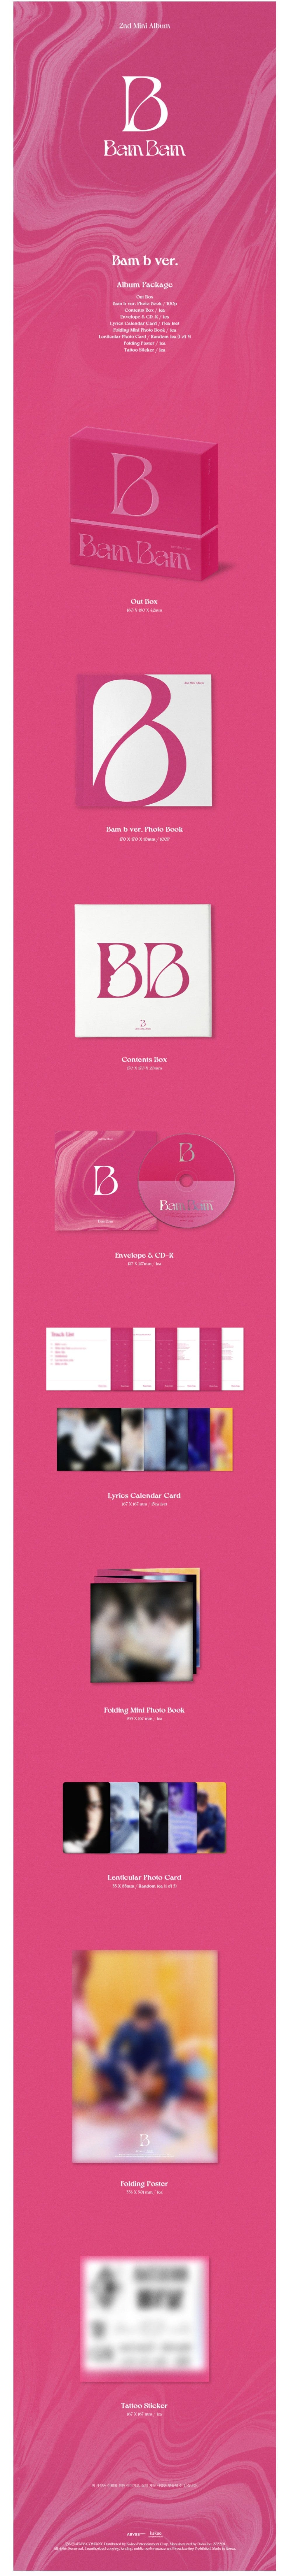 Korea Pop Store BAMBAM - 2ND Mini Album : B Kawaii Gifts